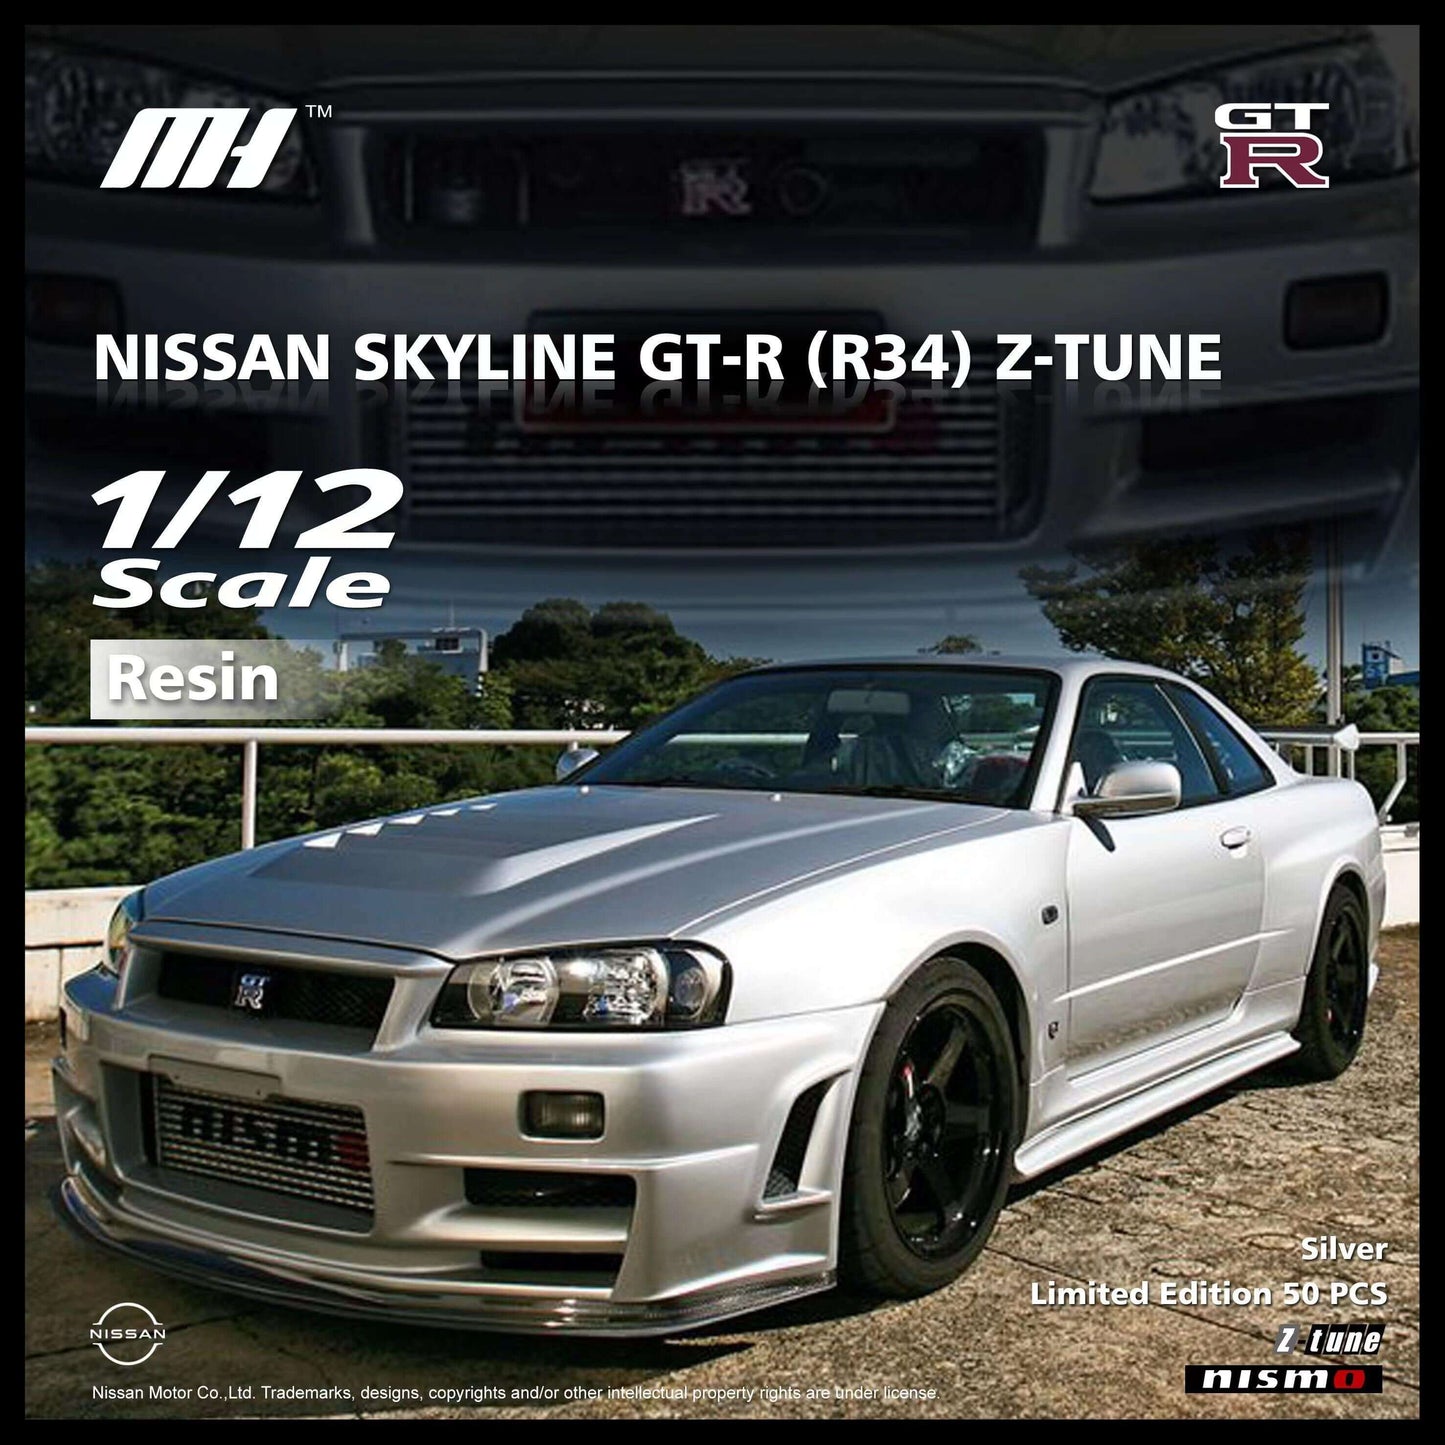 Nissan GTR R34 Z-tune 1:12 Sports Car Limited Edition Resin Model Car